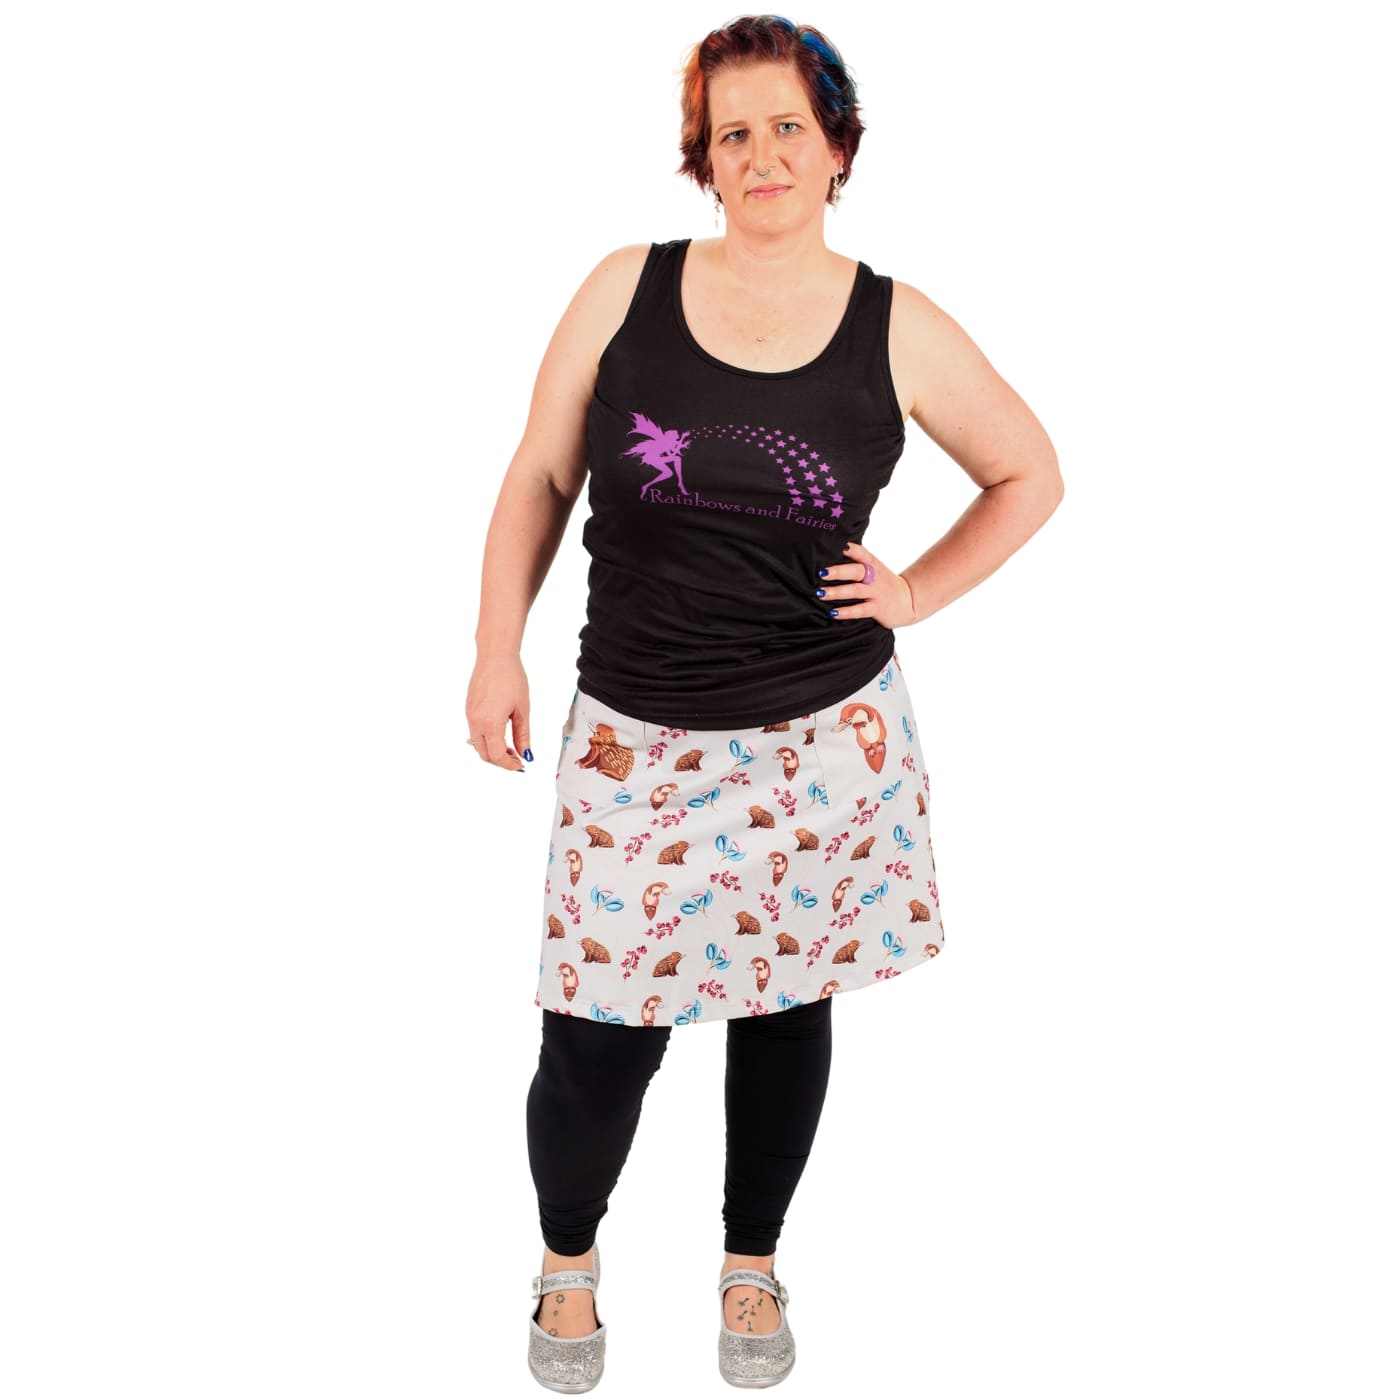 Puggle Short Skirt by RainbowsAndFairies.com (Platypus - Echidna - Australian - Skirt With Pockets - Rockabilly - Vintage Inspired) - SKU: CL_SHORT_PUGGL_ORG - Pic 02